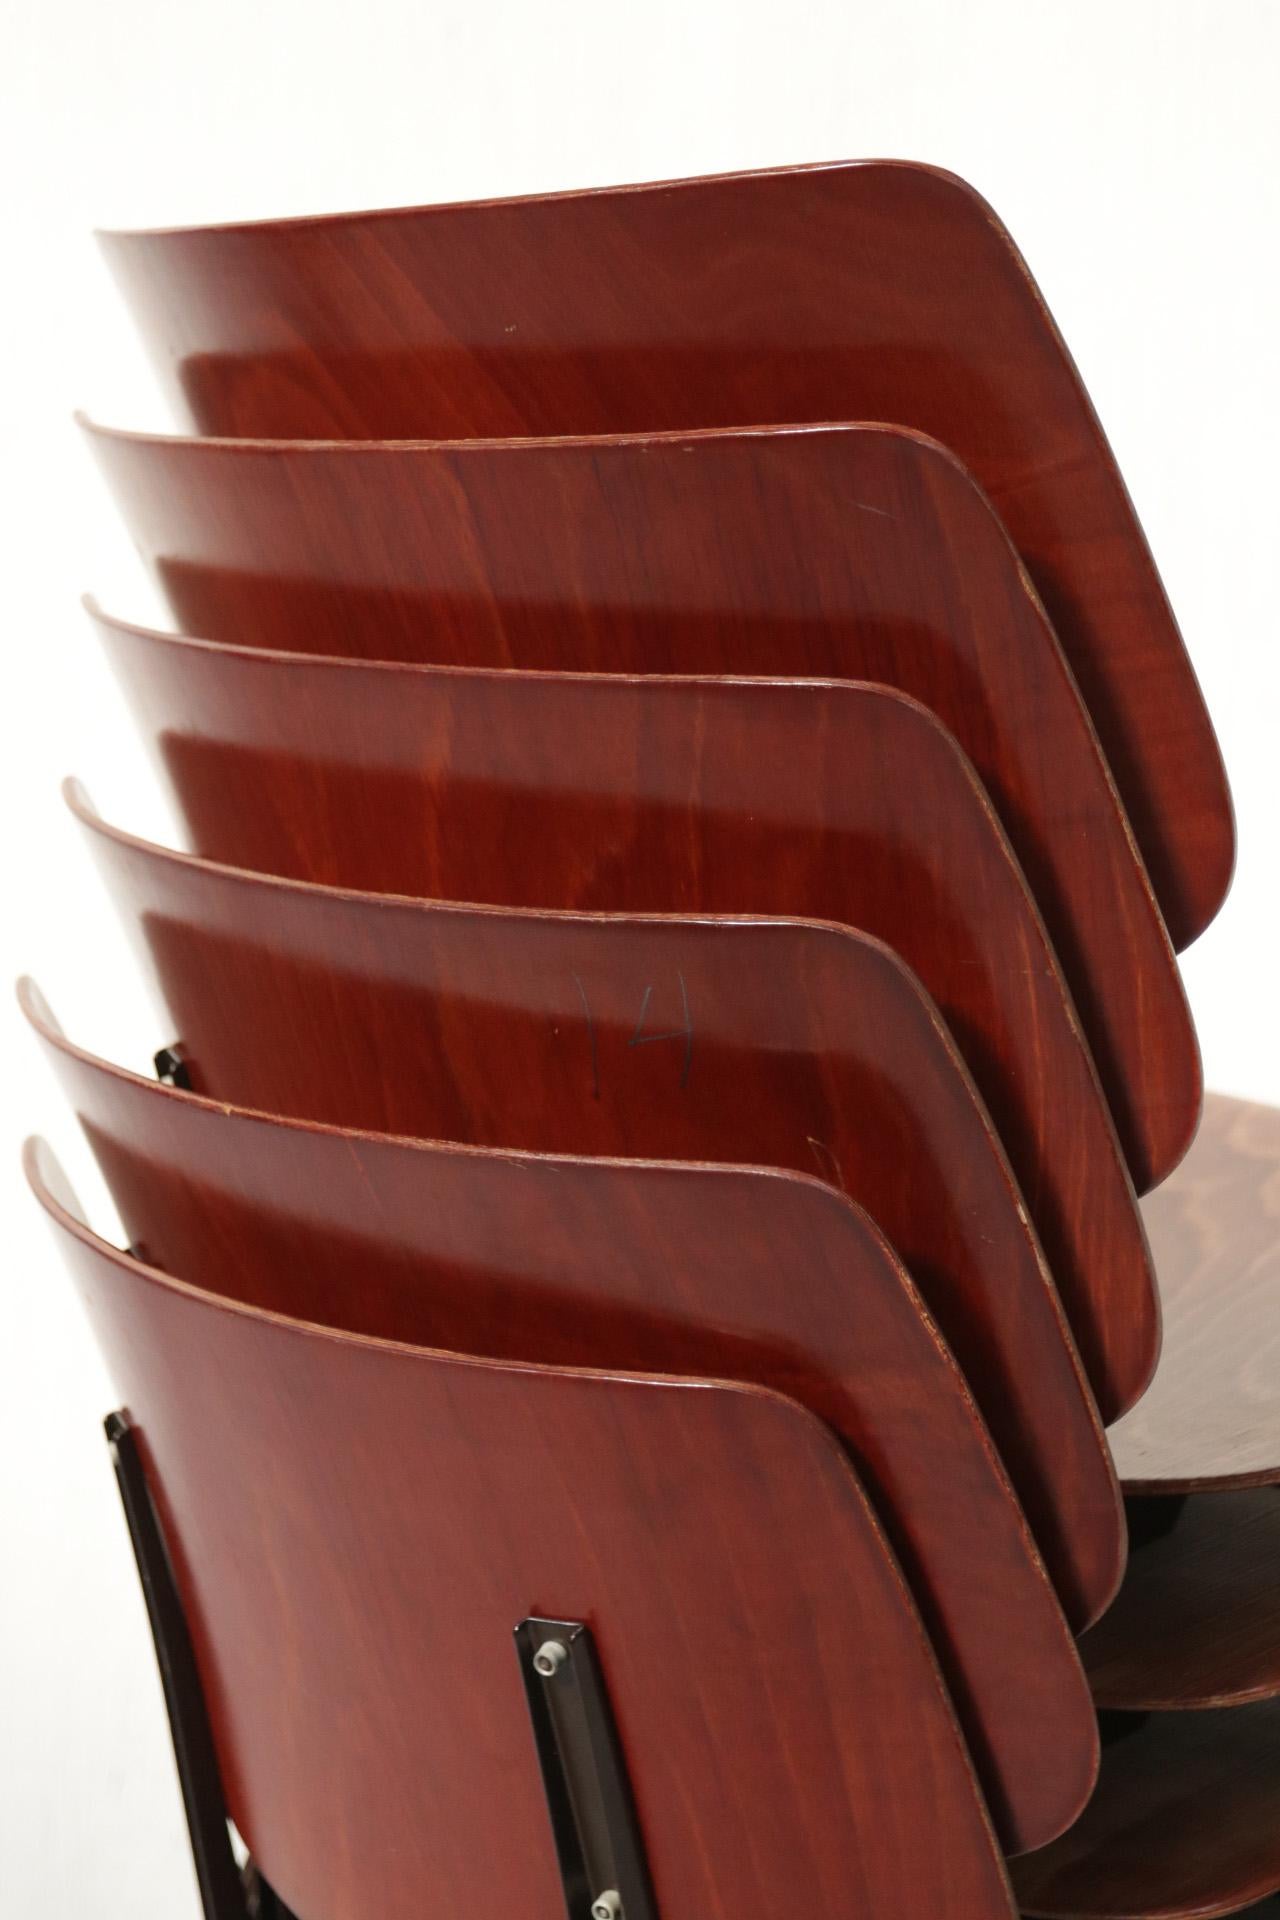 Dutch Industrial Design Prouve Style School Chairs S21 Compas Galvanitas For Sale 2